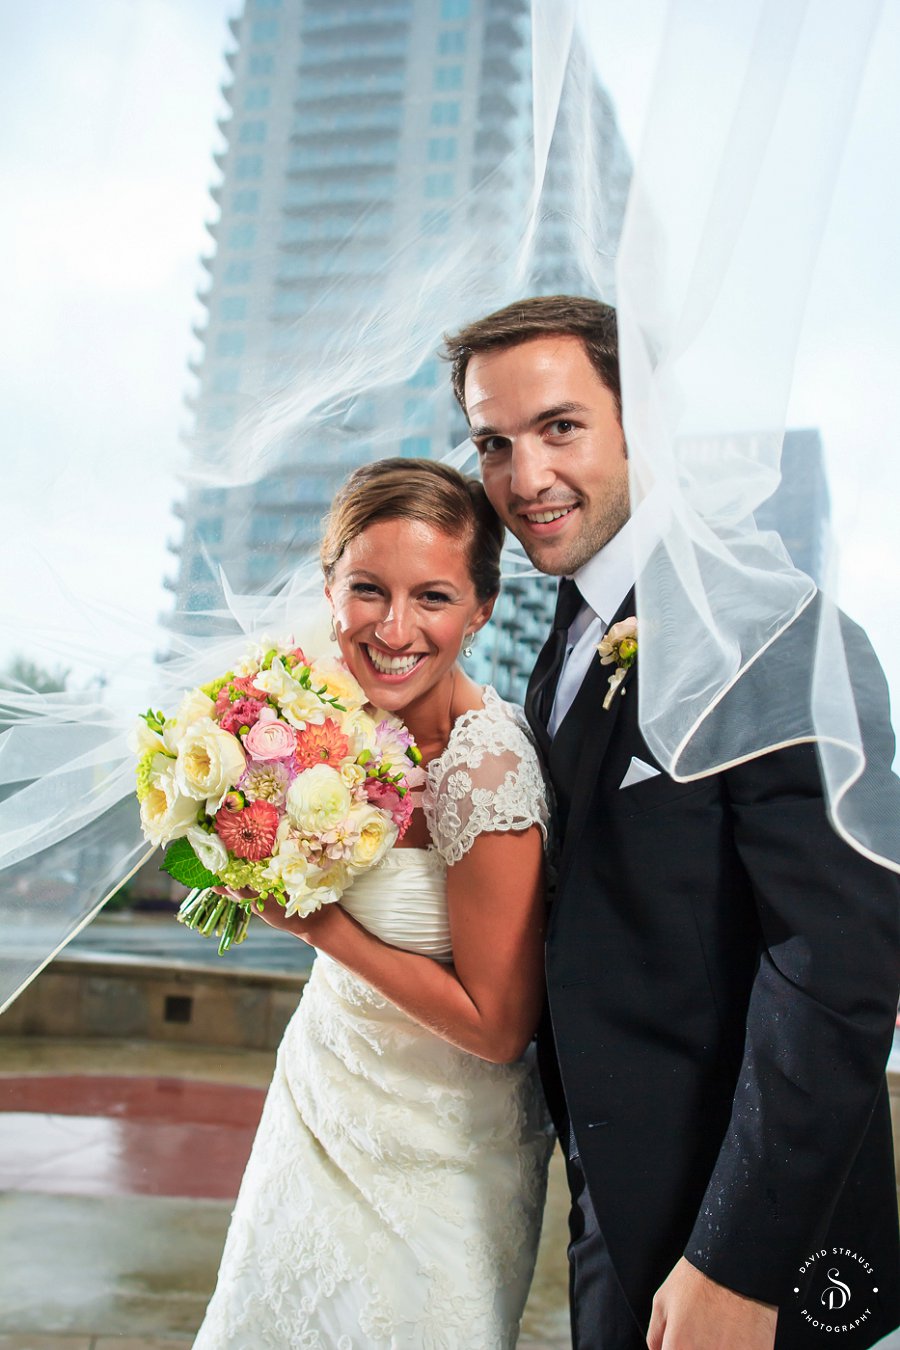 Atlanta Wedding Photography - Charleston Photographer David Strauss - Claire and Kyle - 19